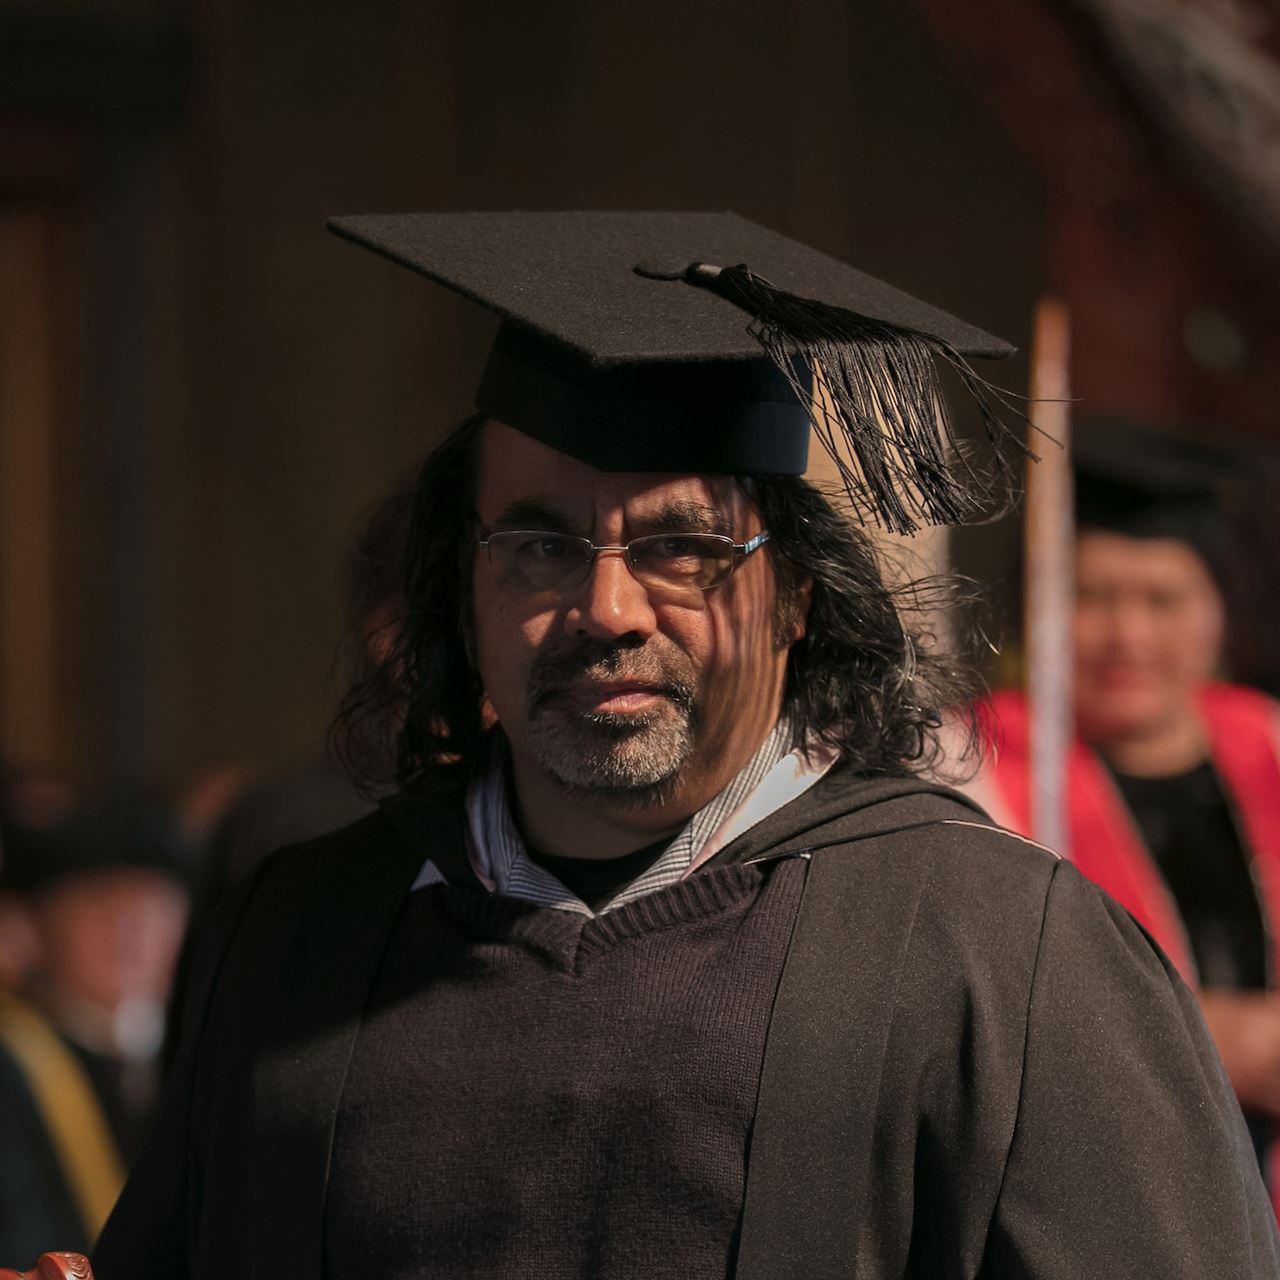 Te Moanaroa Ngatoko, Master of Indigenous Studies graduate